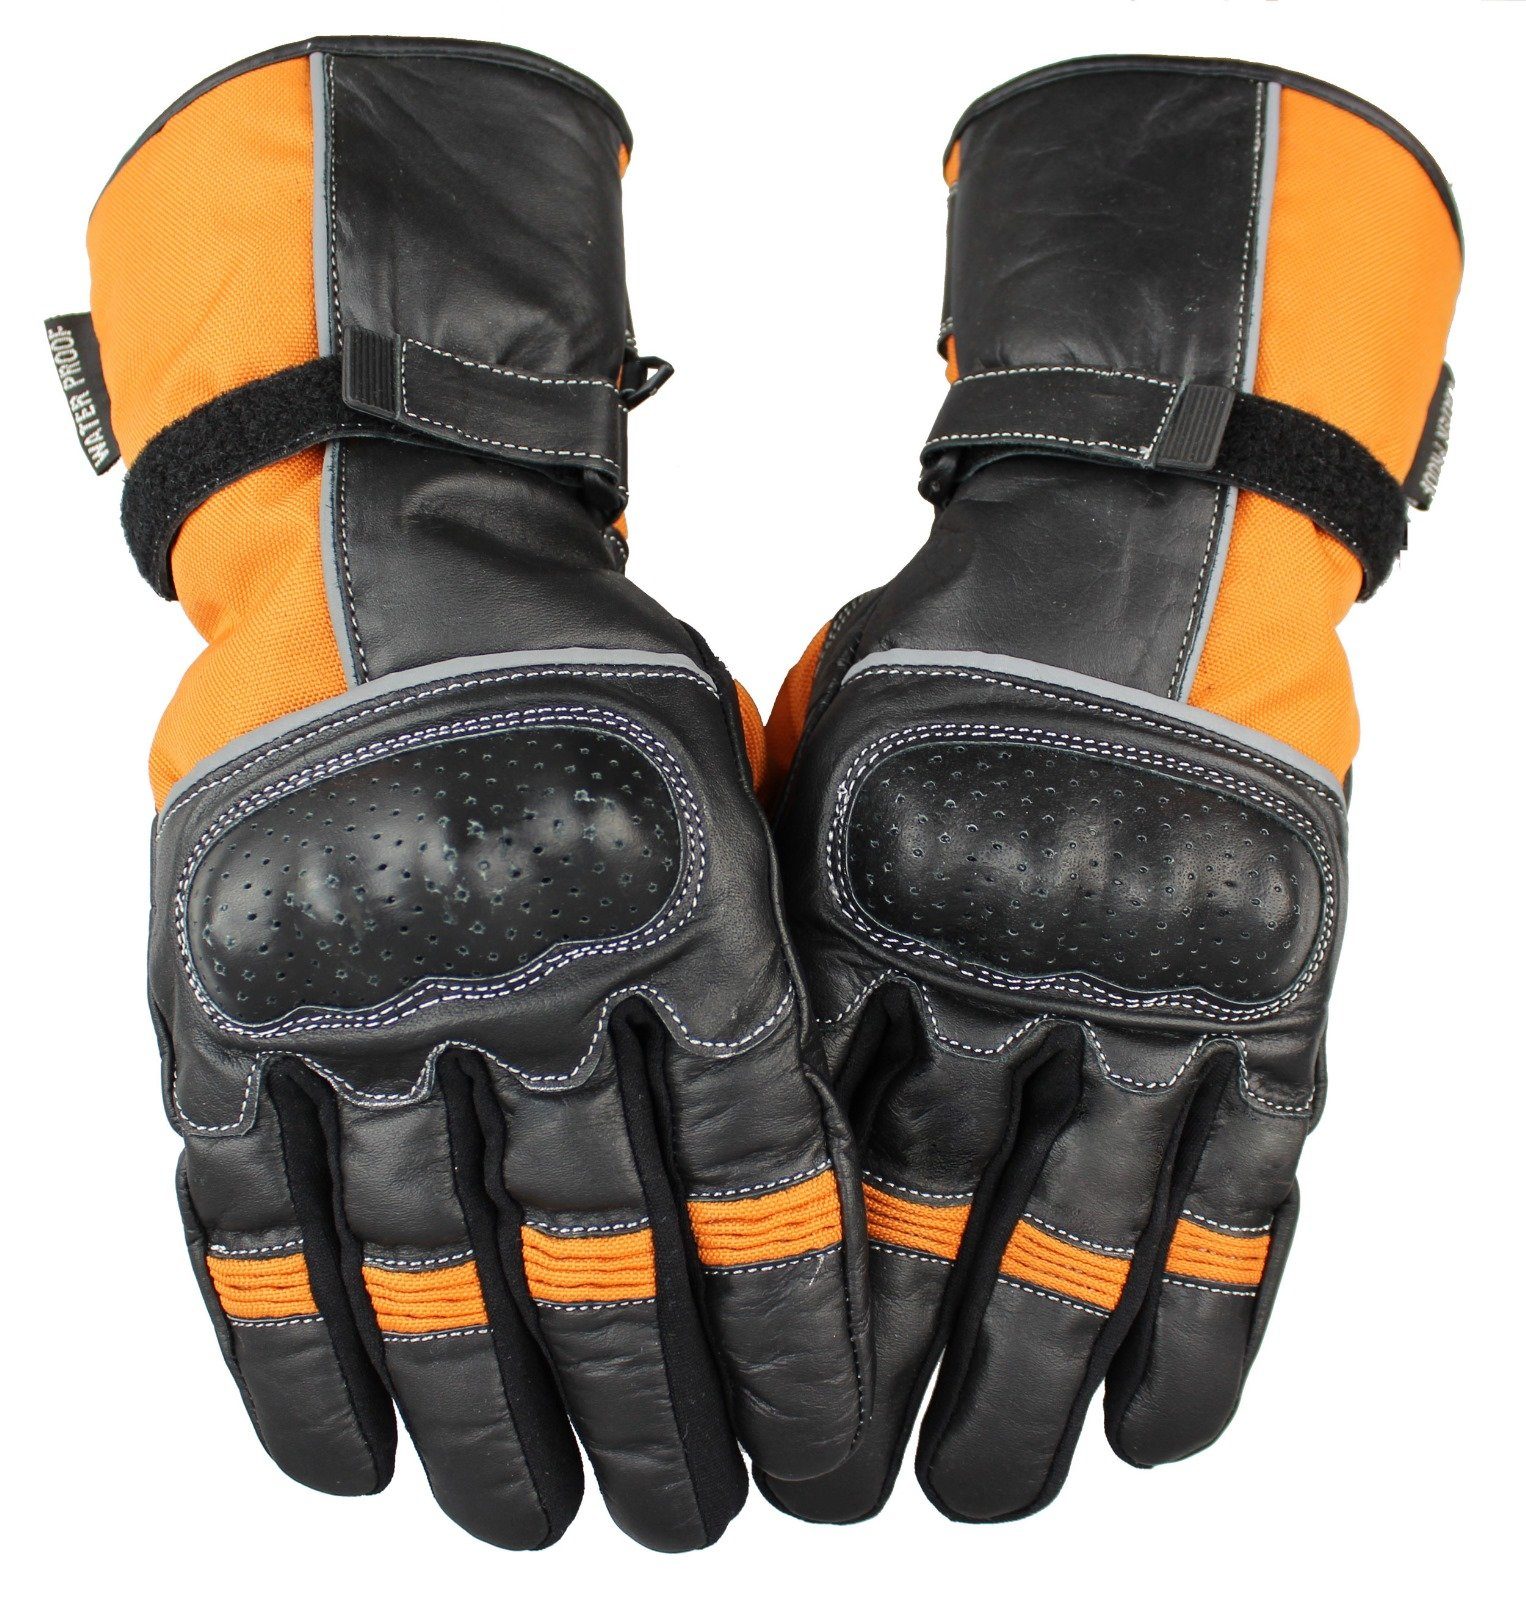 Winter Biker Motorradhandschuhe + Handschuhe Reflektierende Handschuhe Atmungsaktiv + (Touchscreen Funktion) Winddicht Alpha für Custom Speeds Wasserdicht + Orange Material Racing